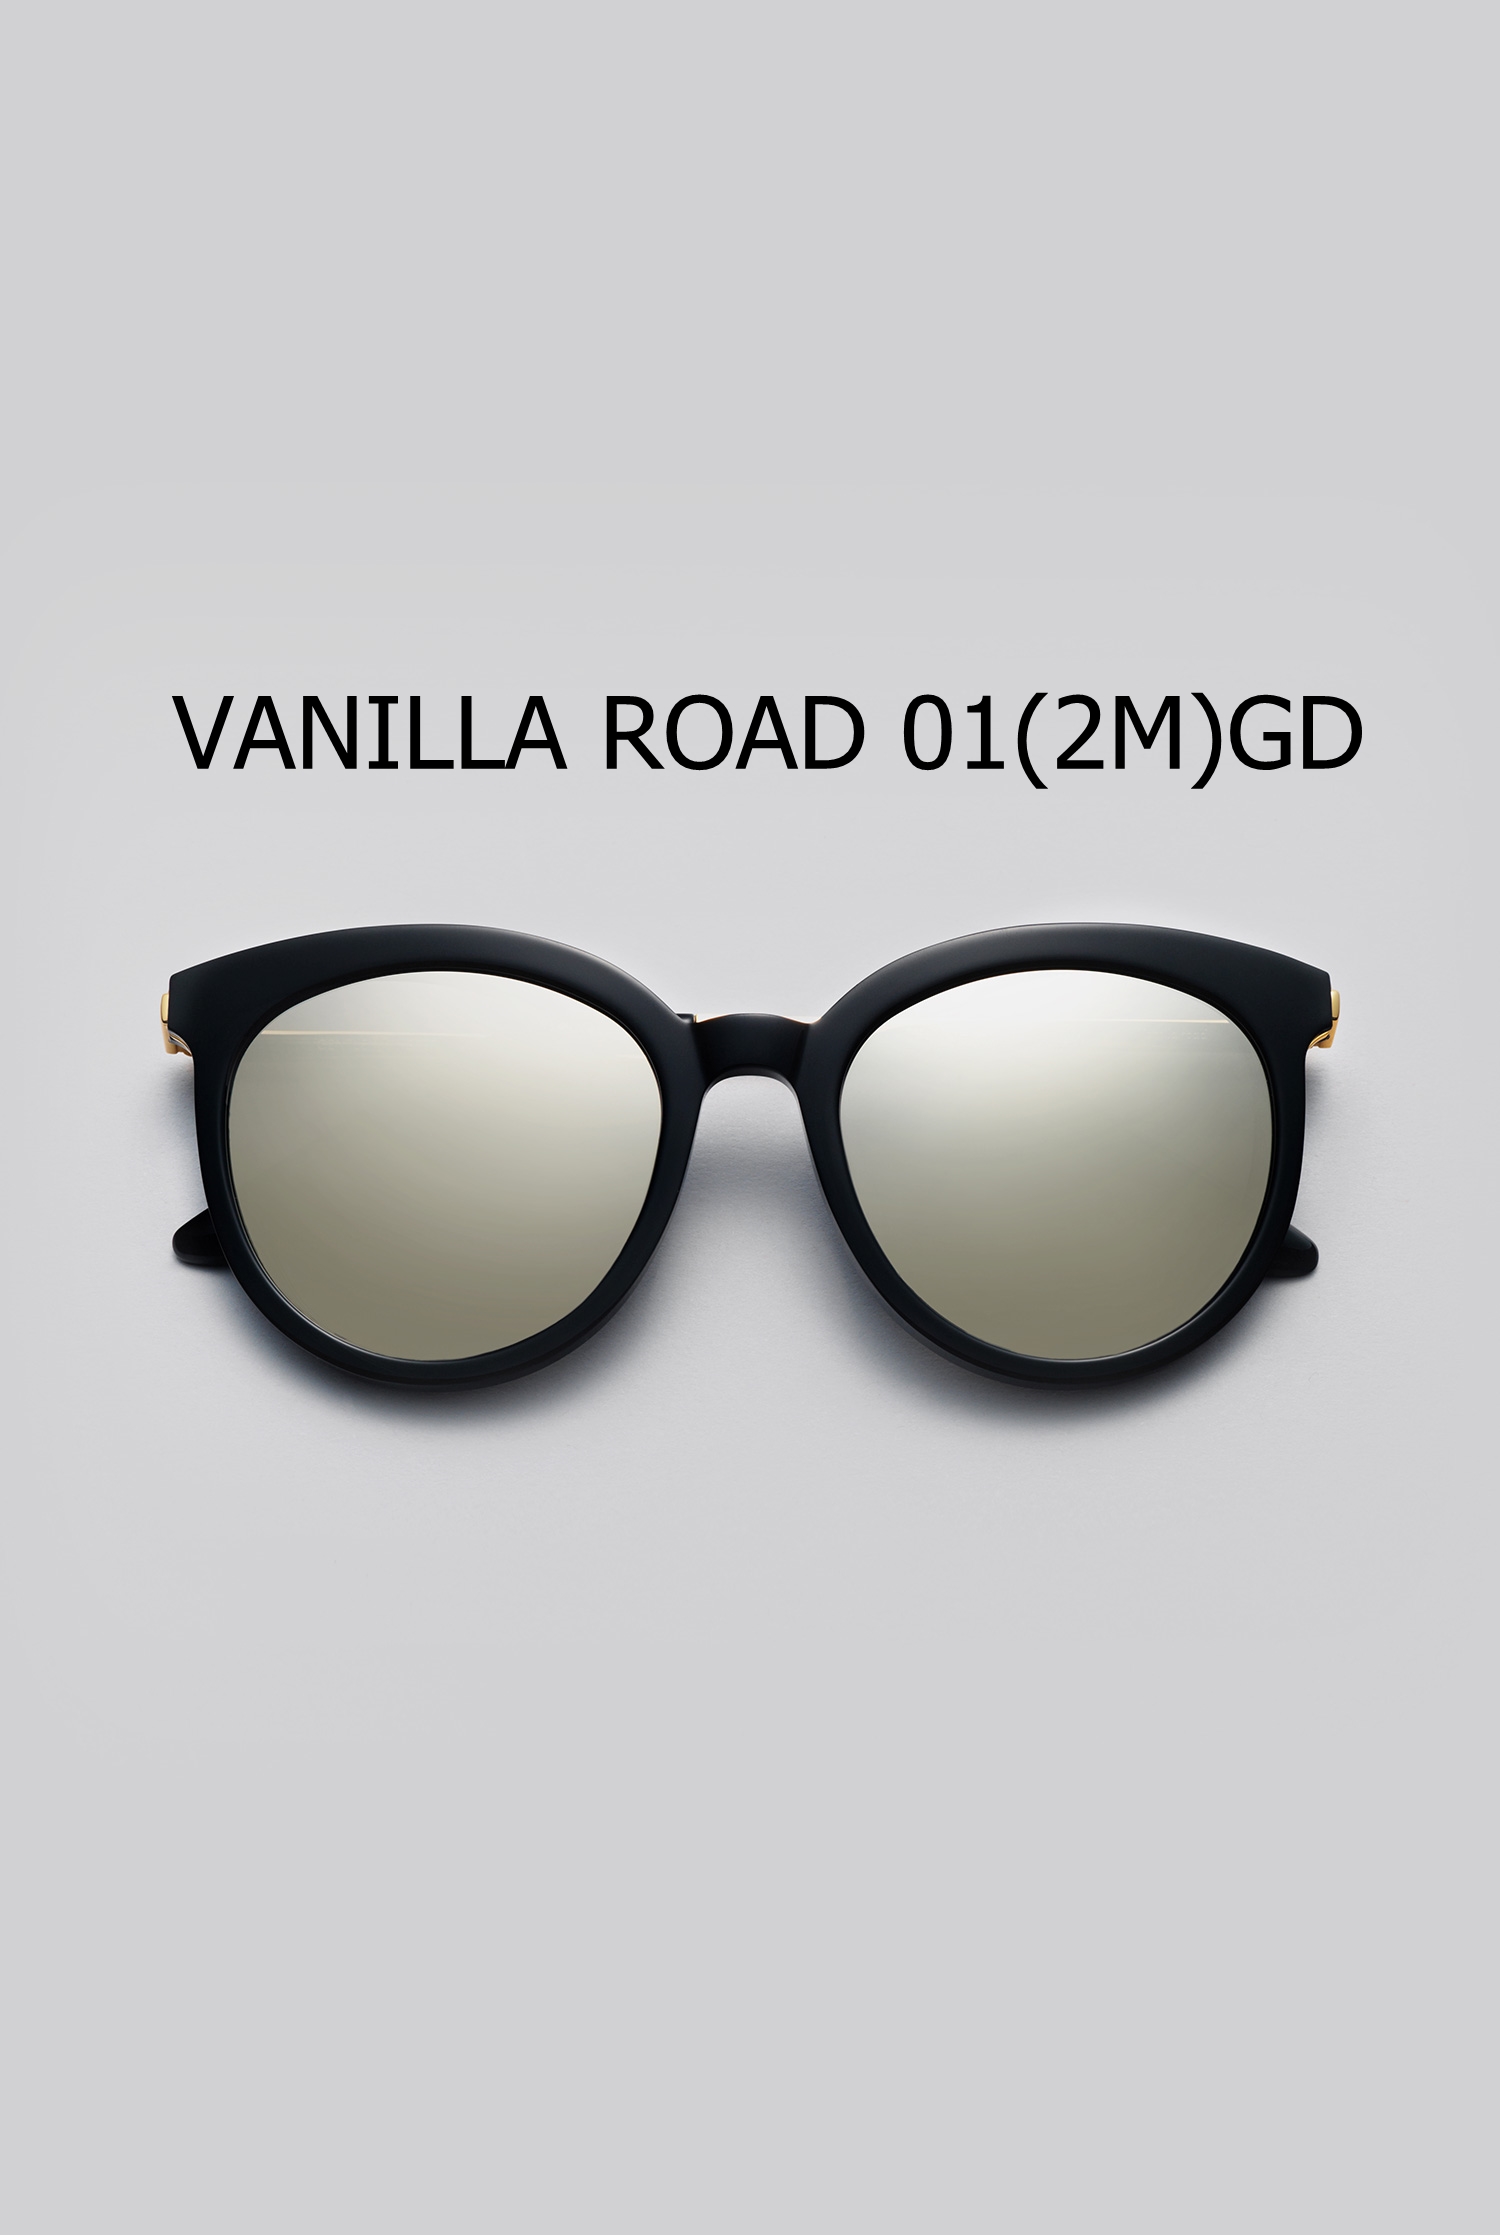 VANILLA ROAD 01(2M)GD 